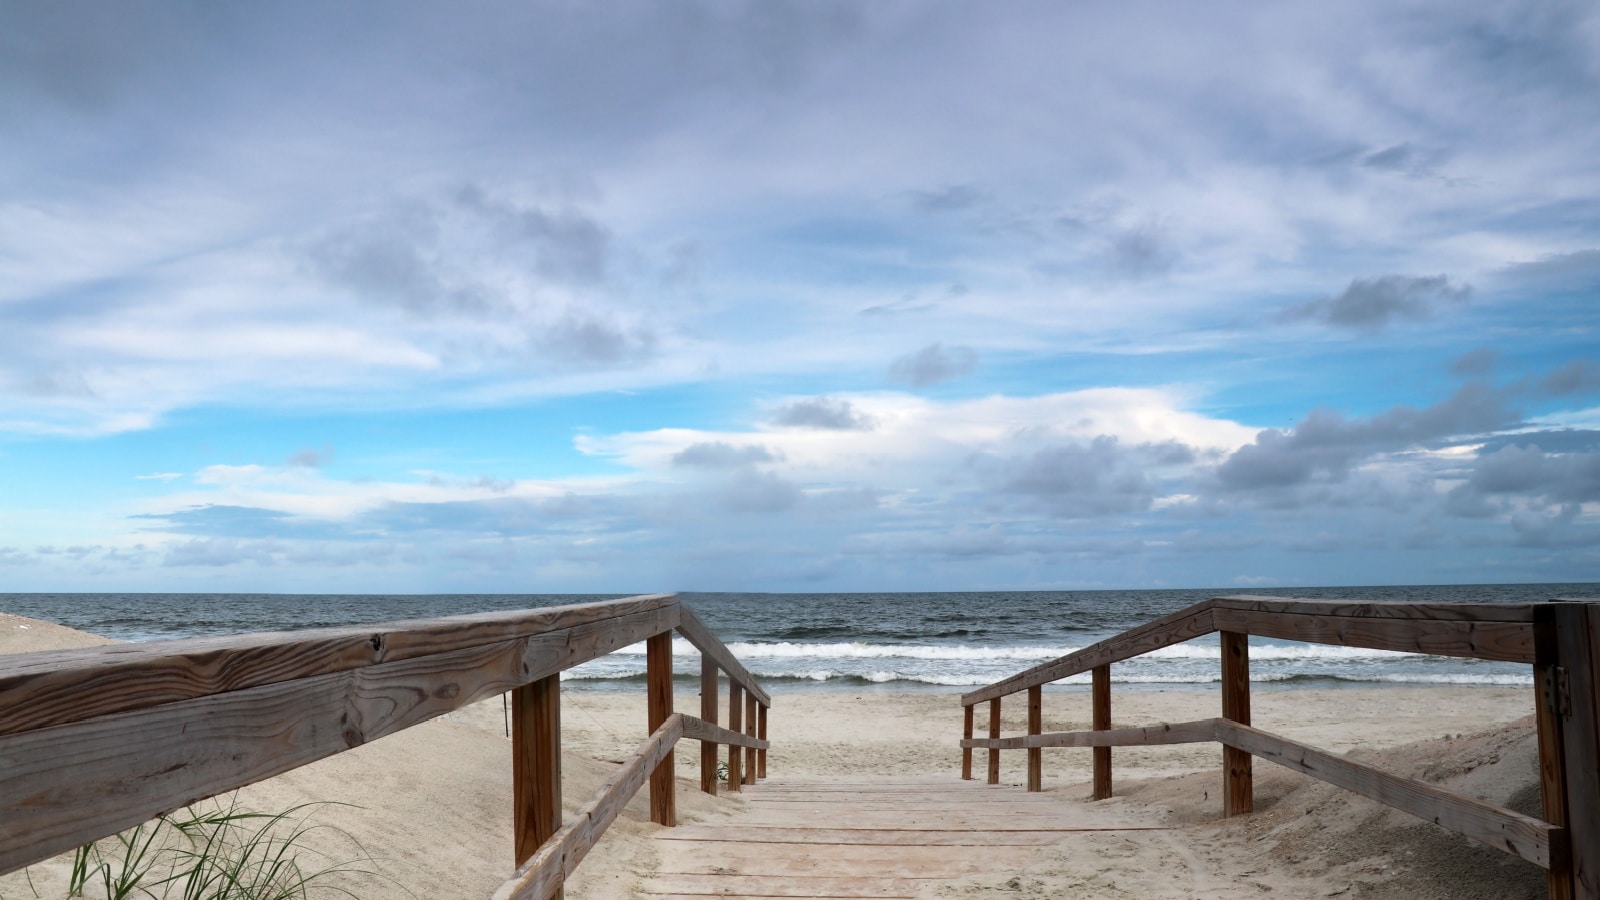 Way to the beach. Ocean beach view.Marine landscape with wooden boardwalk leads to the atlantic ocean beach. Pawleys Island, Myrtle Beach area, South Carolina USA.